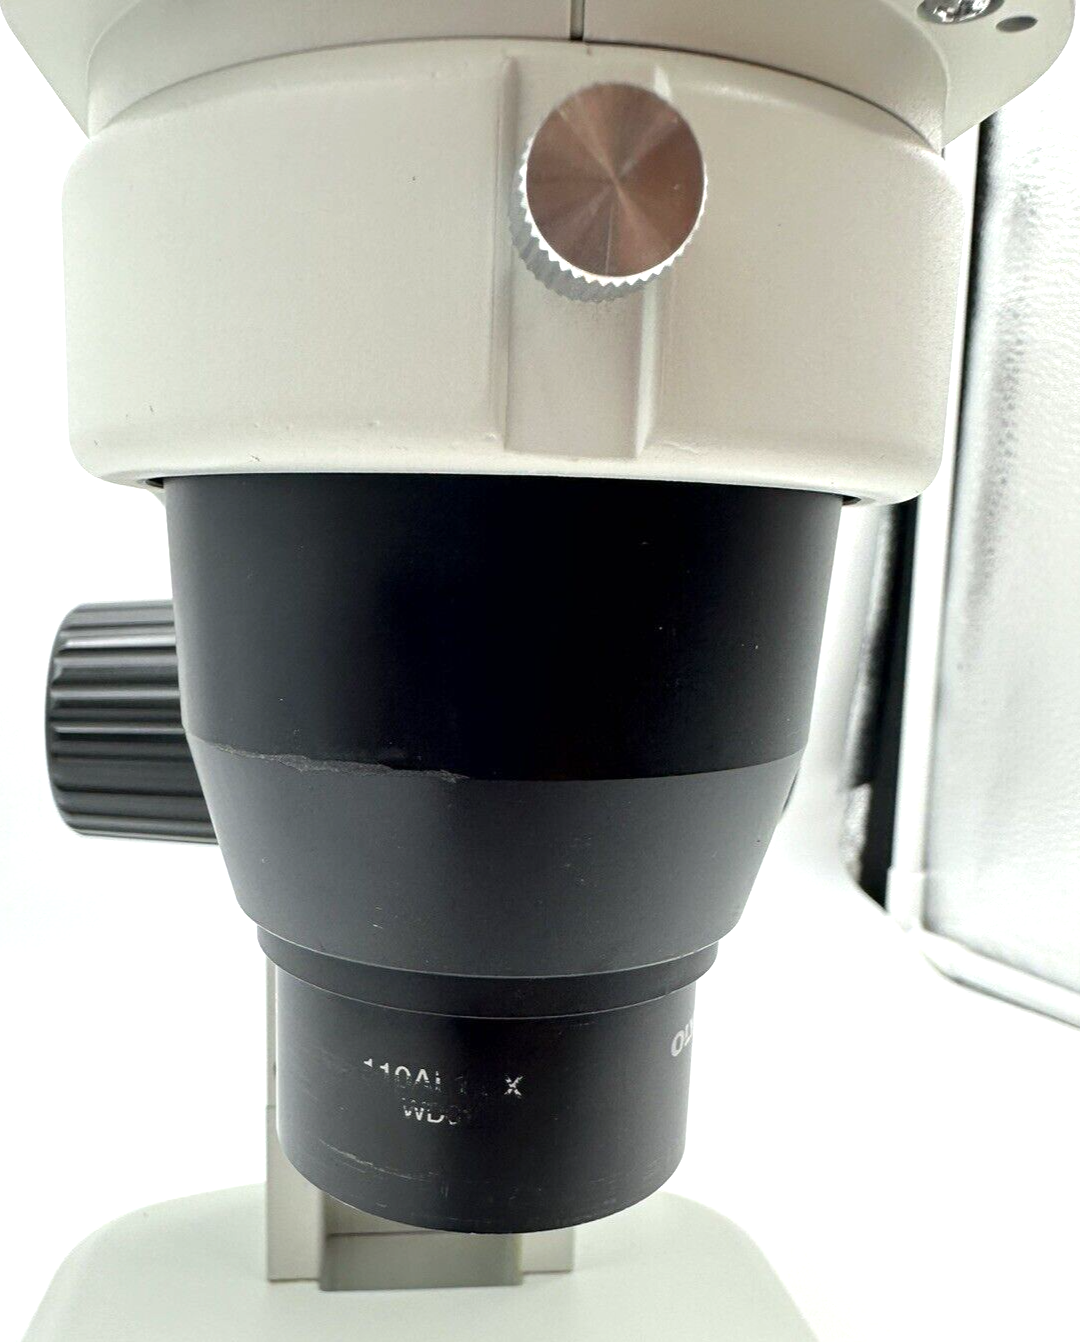 Olympus Stereo Microscope SZ61 with Trinocular Head and Camera Port - microscopemarketplace